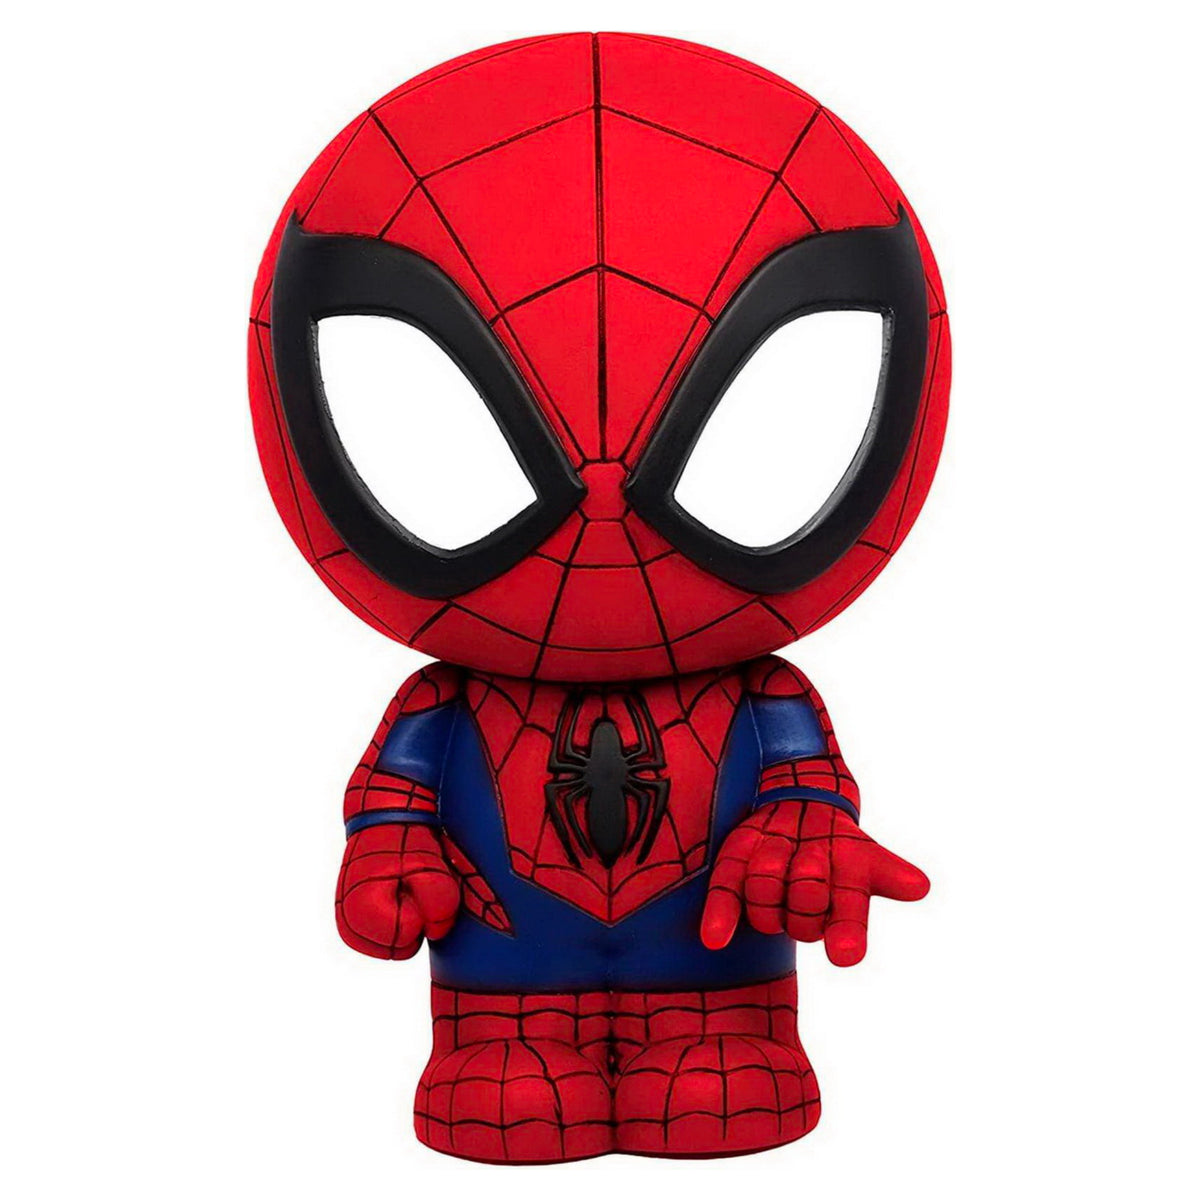 Avengers Spider-Man Figural Bank